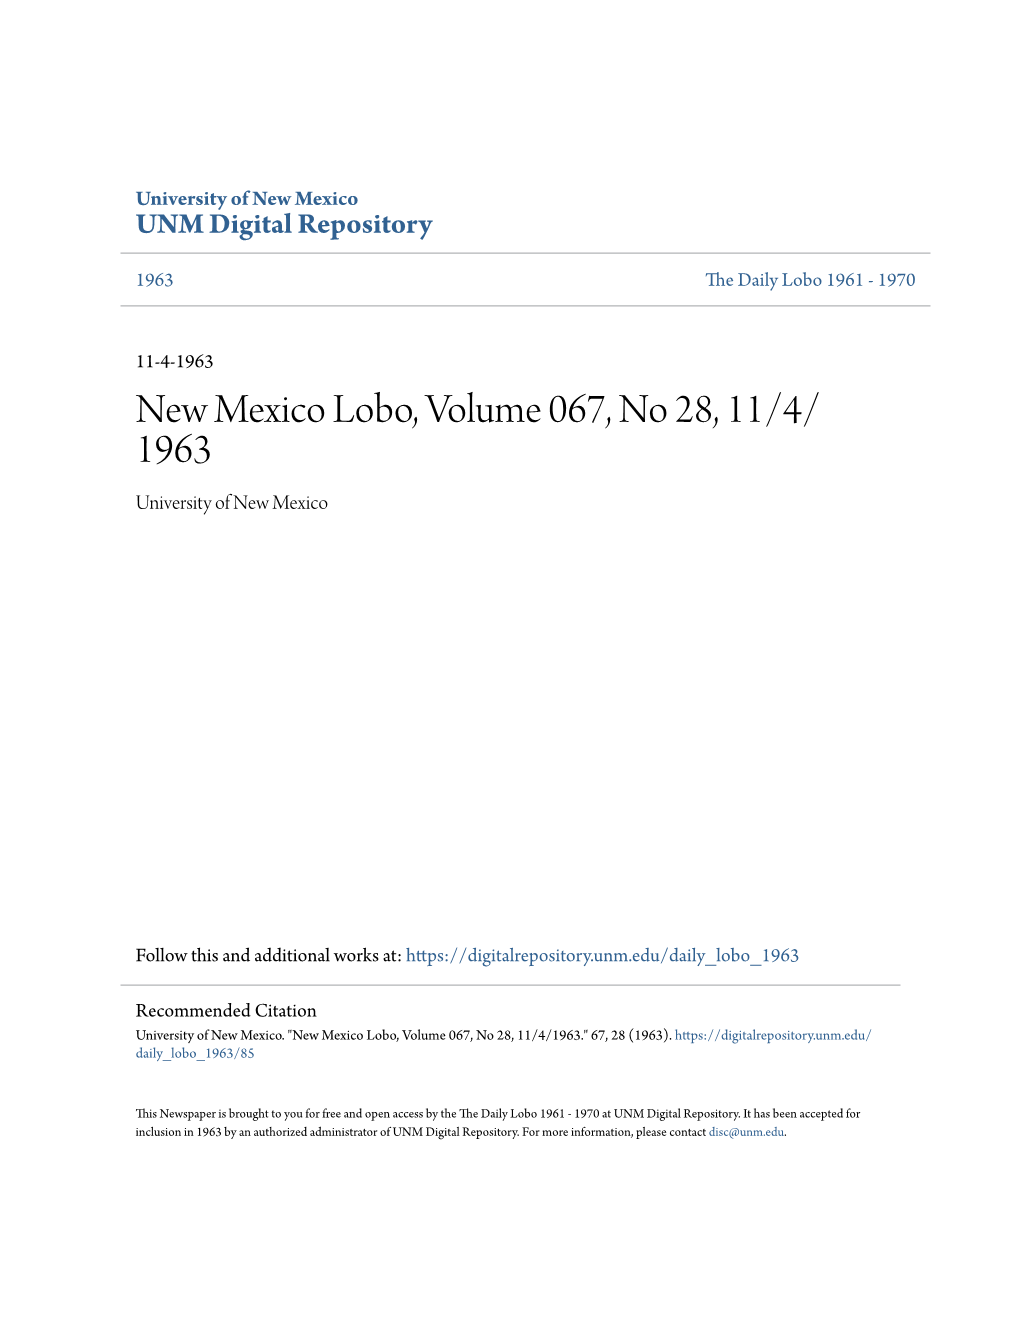 New Mexico Lobo, Volume 067, No 28, 11/4/1963." 67, 28 (1963)